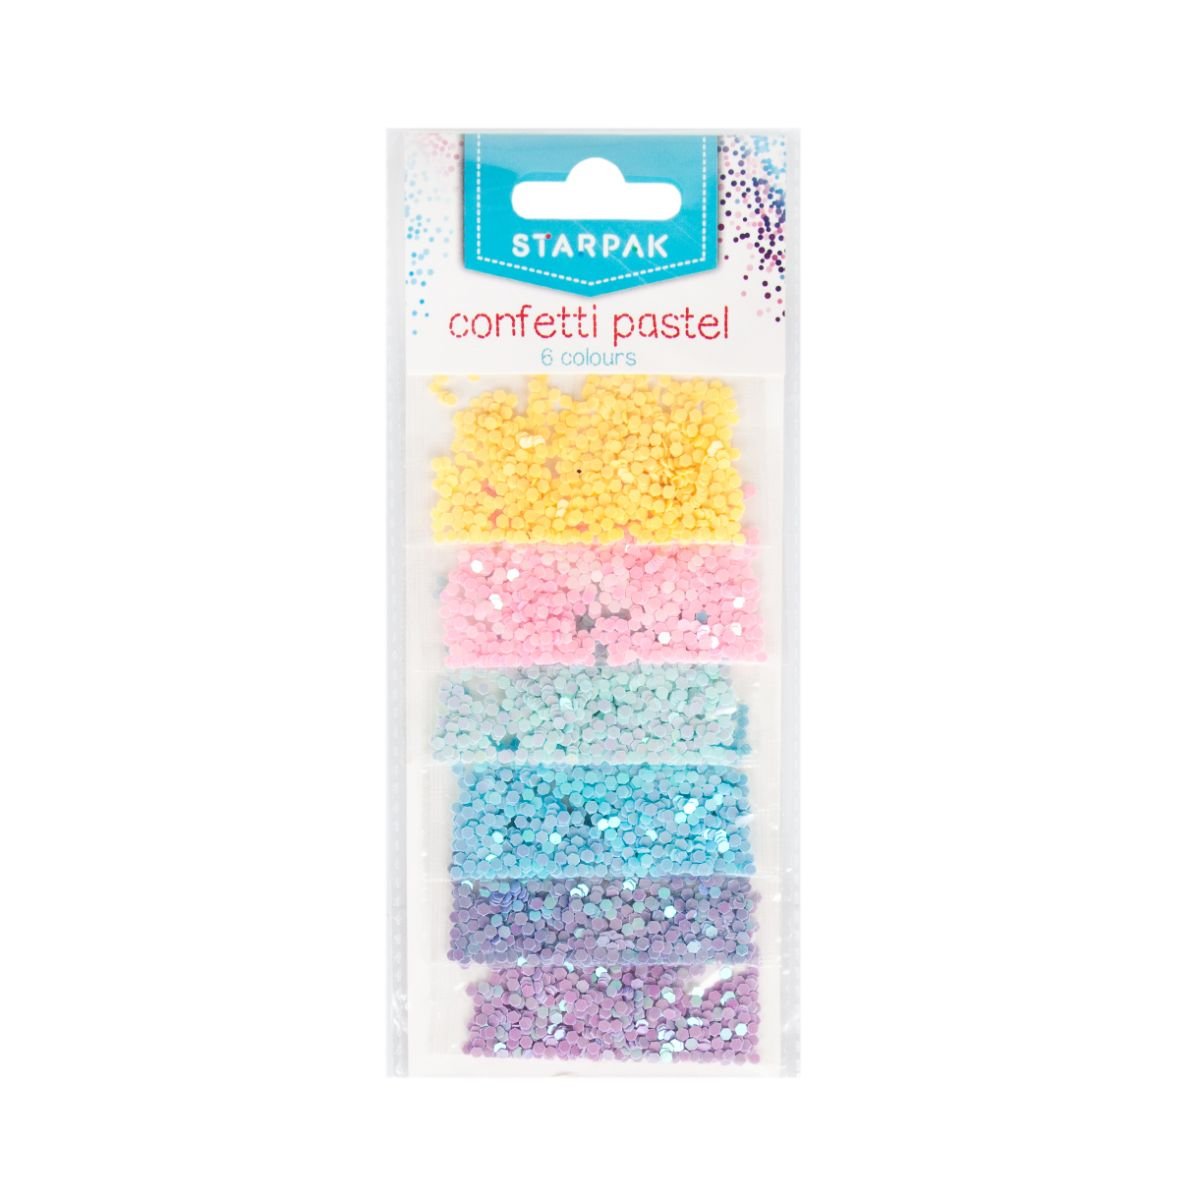 Confetti, Starpak, 6 culori pastel noriel.ro